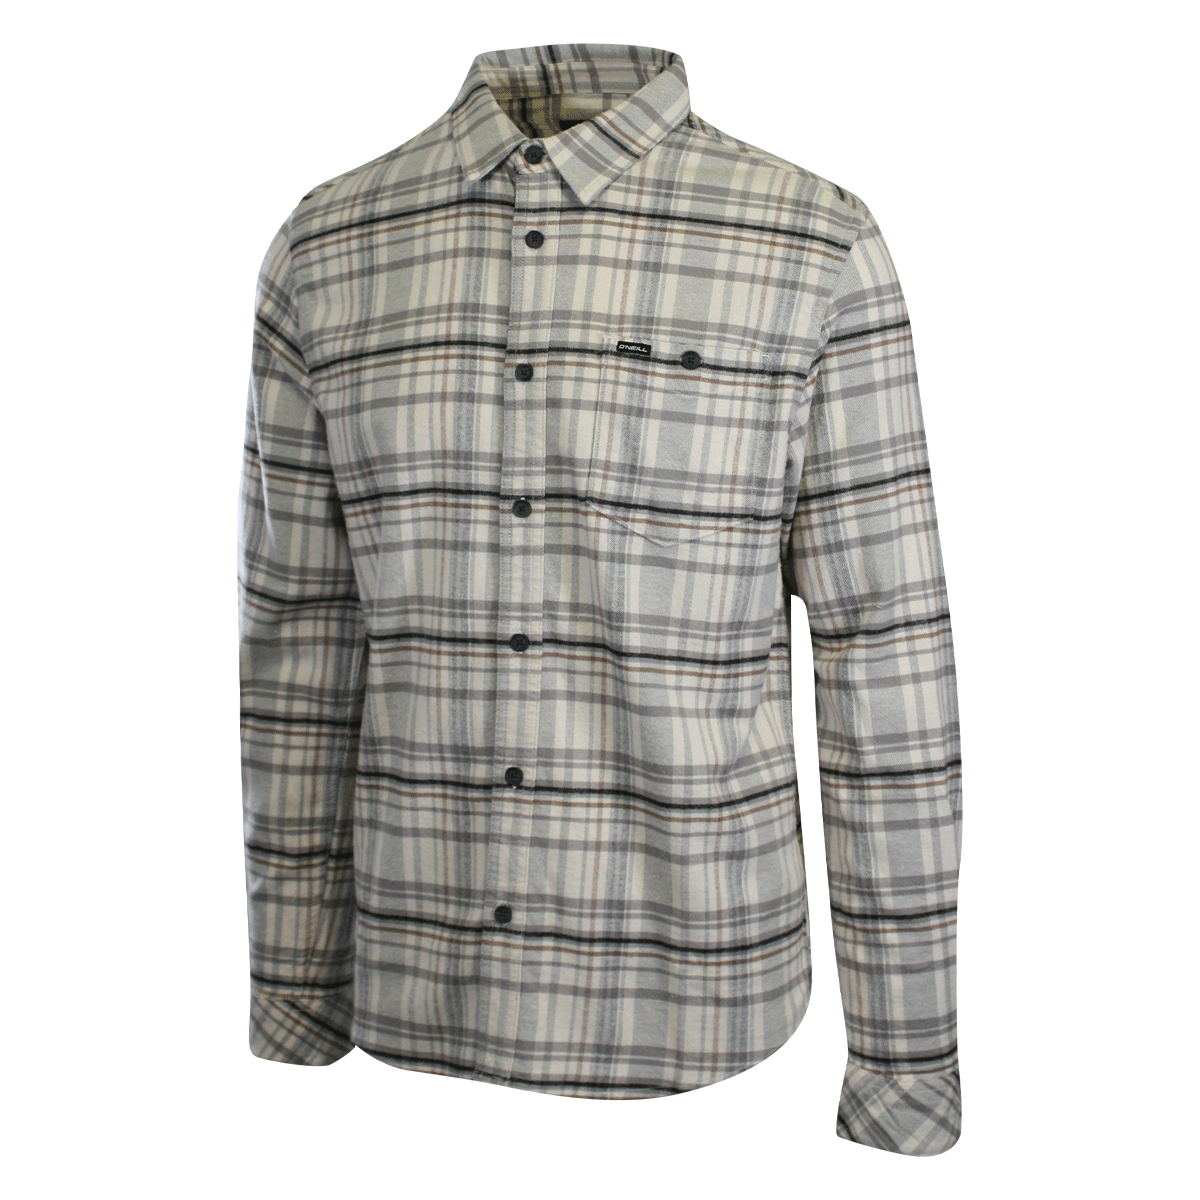 O'Neill Men's Cream Shirt Redmond Plaid Stretch Flannel Long Sleeve (S30)